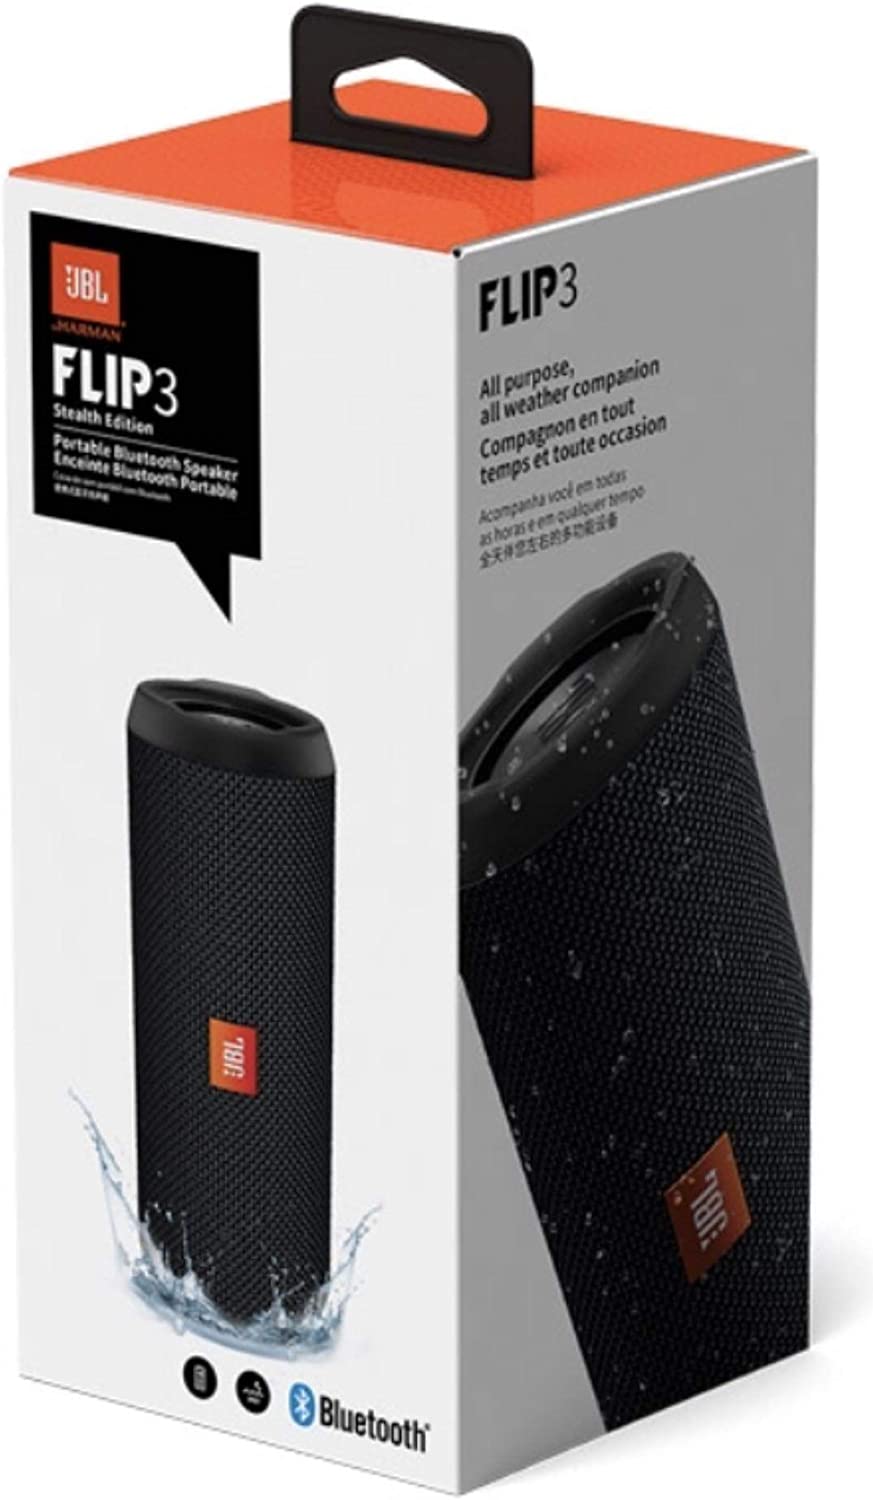 Flip 3 Stealth Portable Bluetooth Speaker with Deep Bass | Retail Babu | Azha Pasa